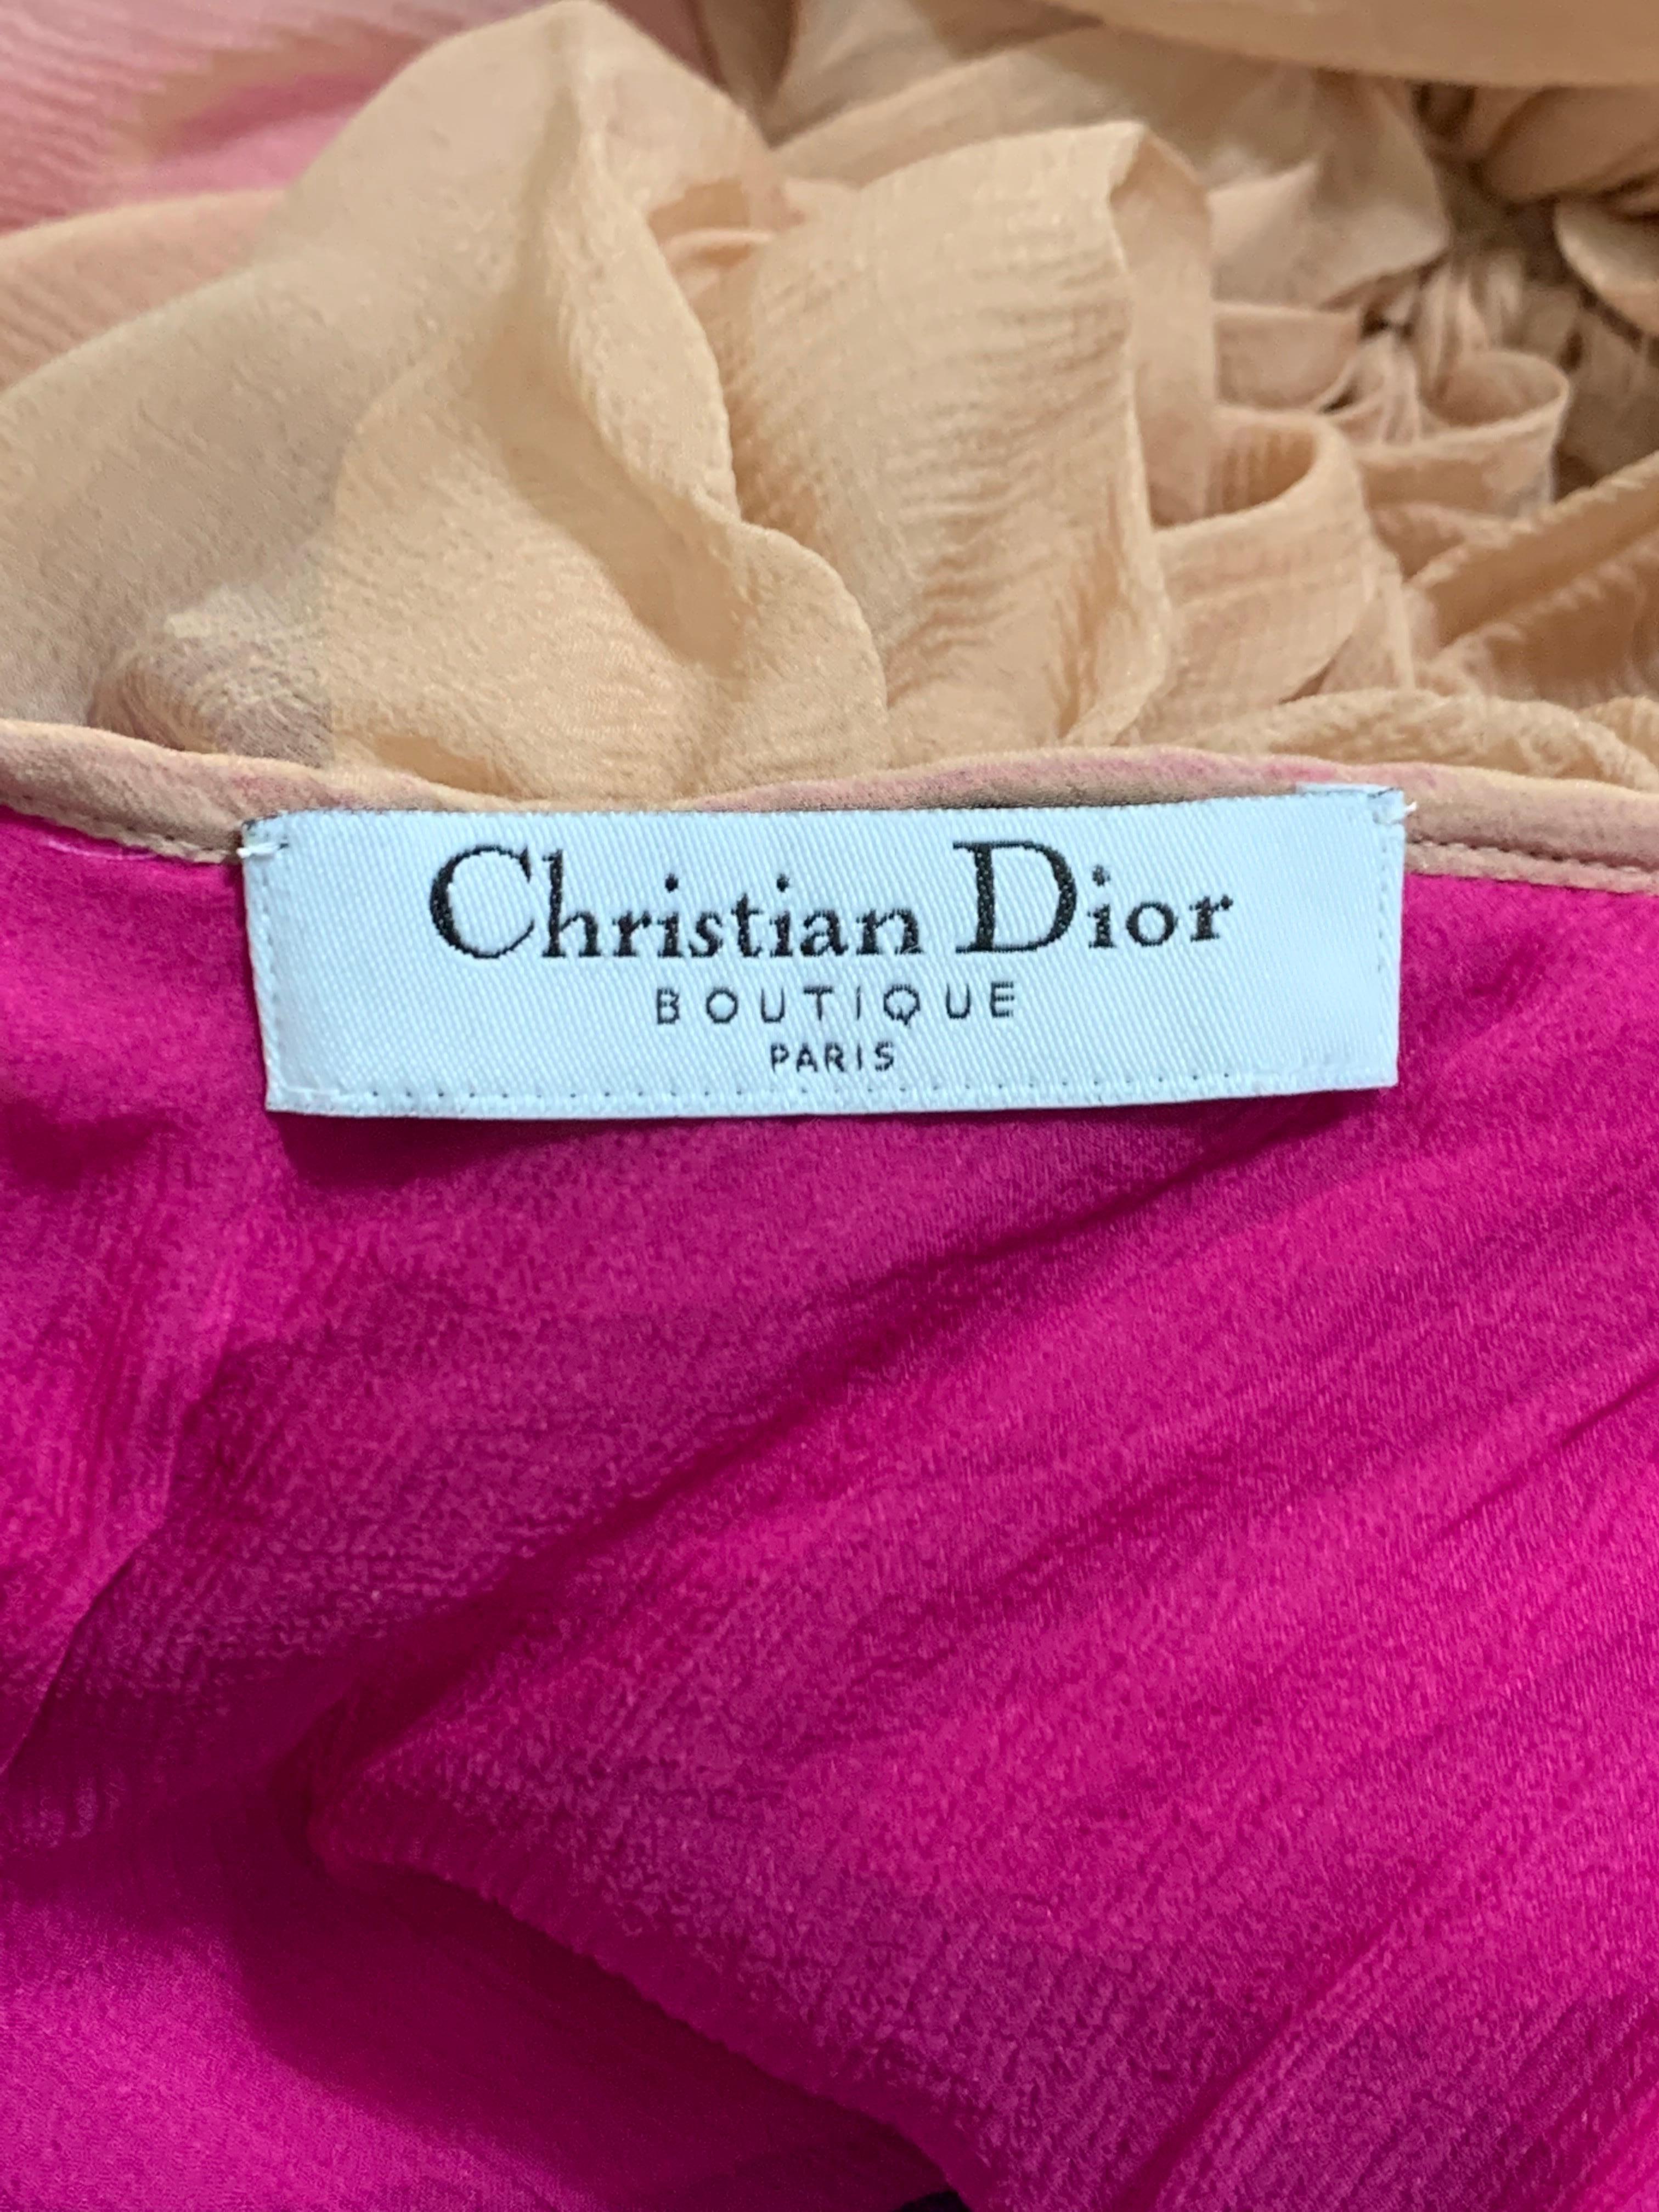 Women's S/S 2006 Christian Dior John Galliano Runway Sheer Nude Pink Silk Gown Dress